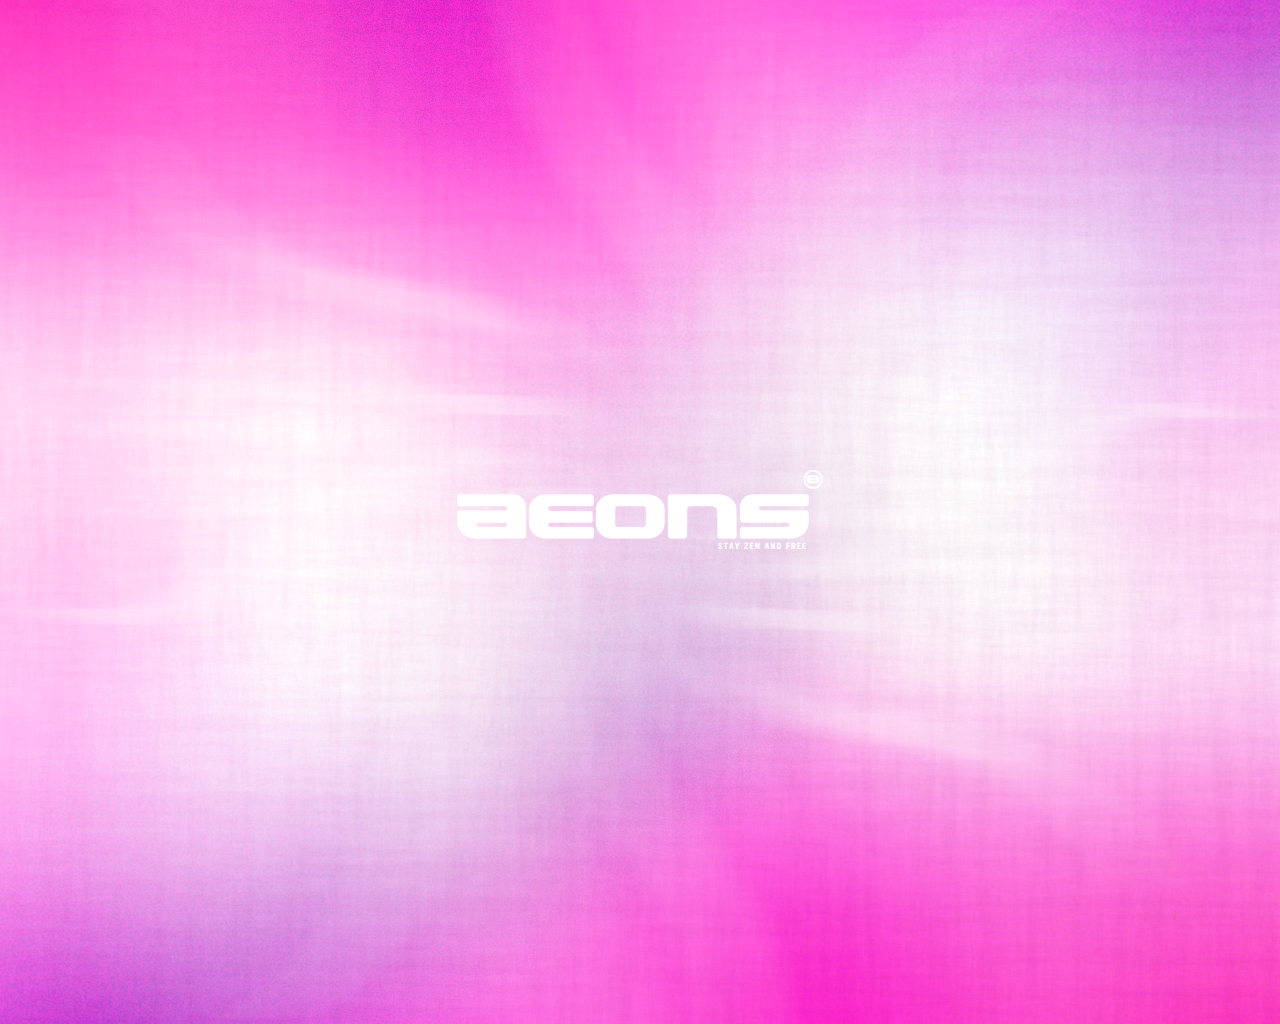 Aeons_02_1280x1024.jpg